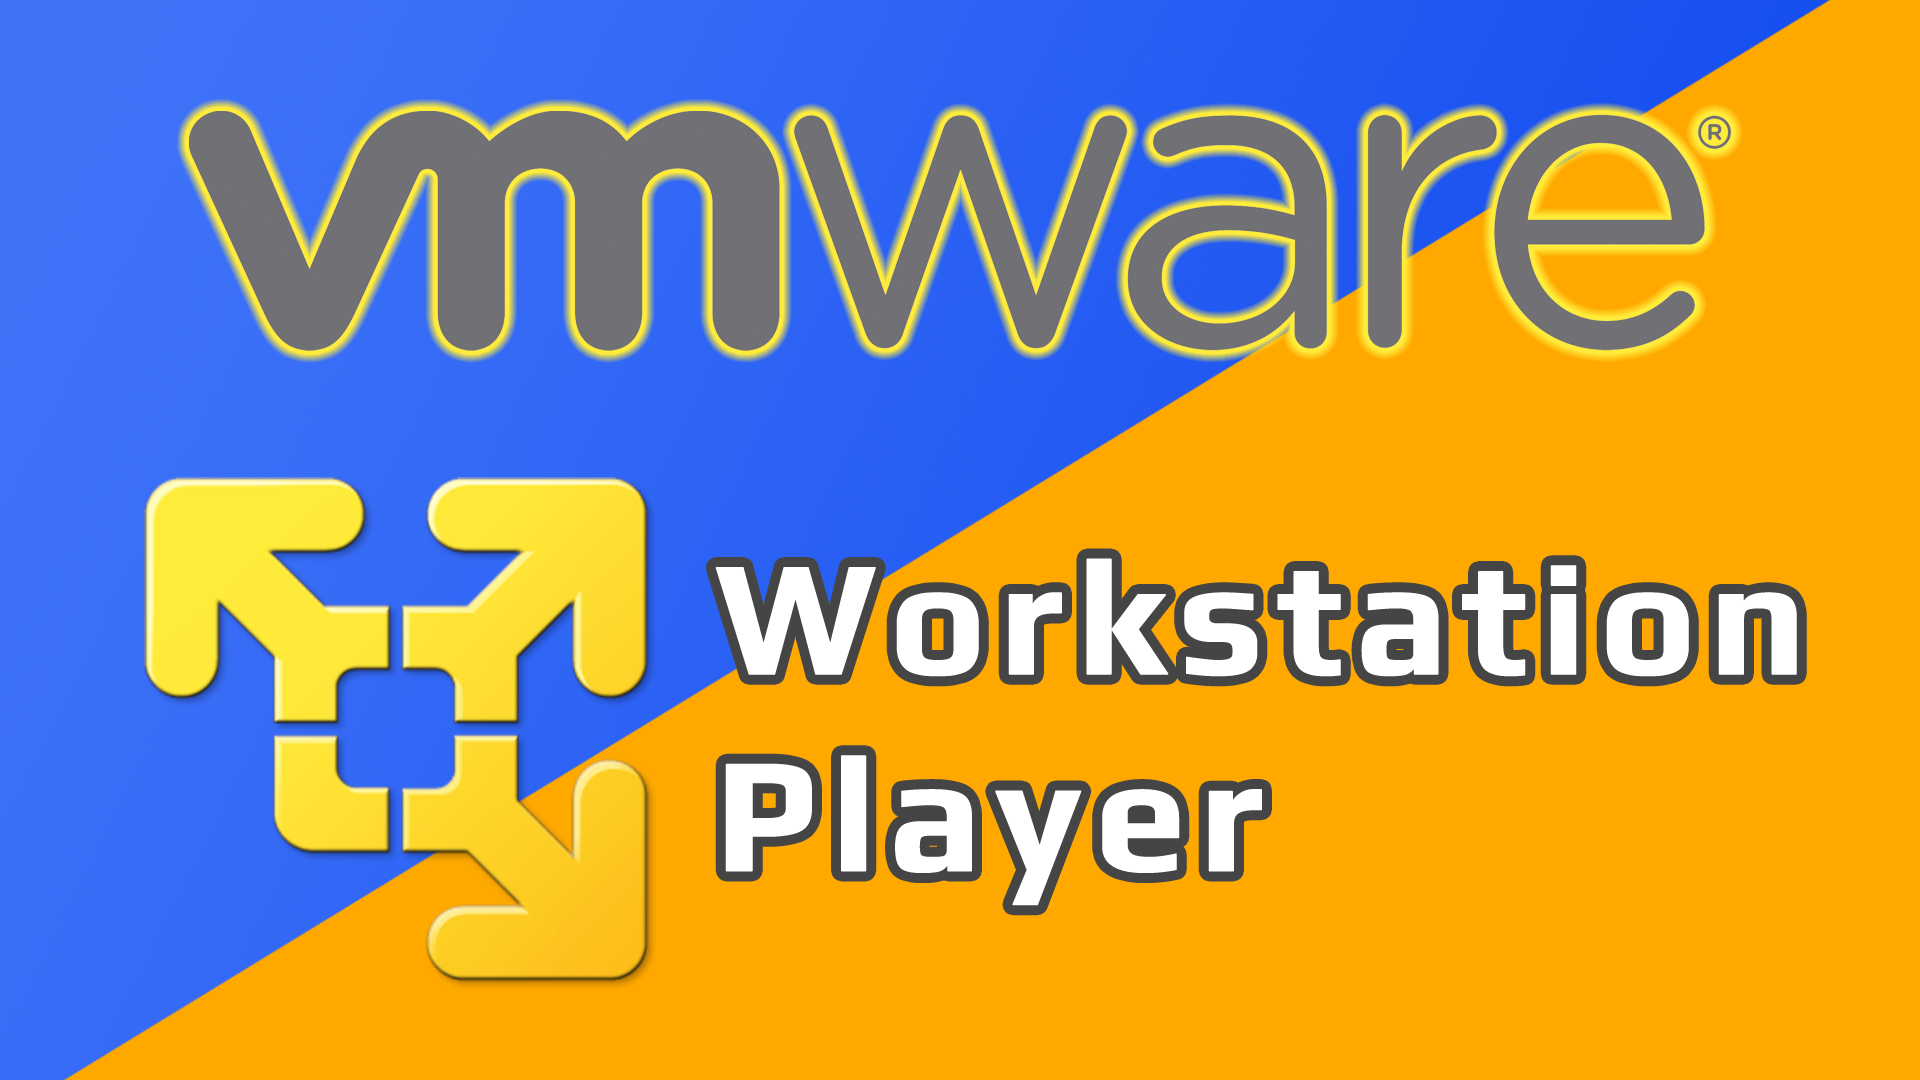 vmware player workstation 9 free download